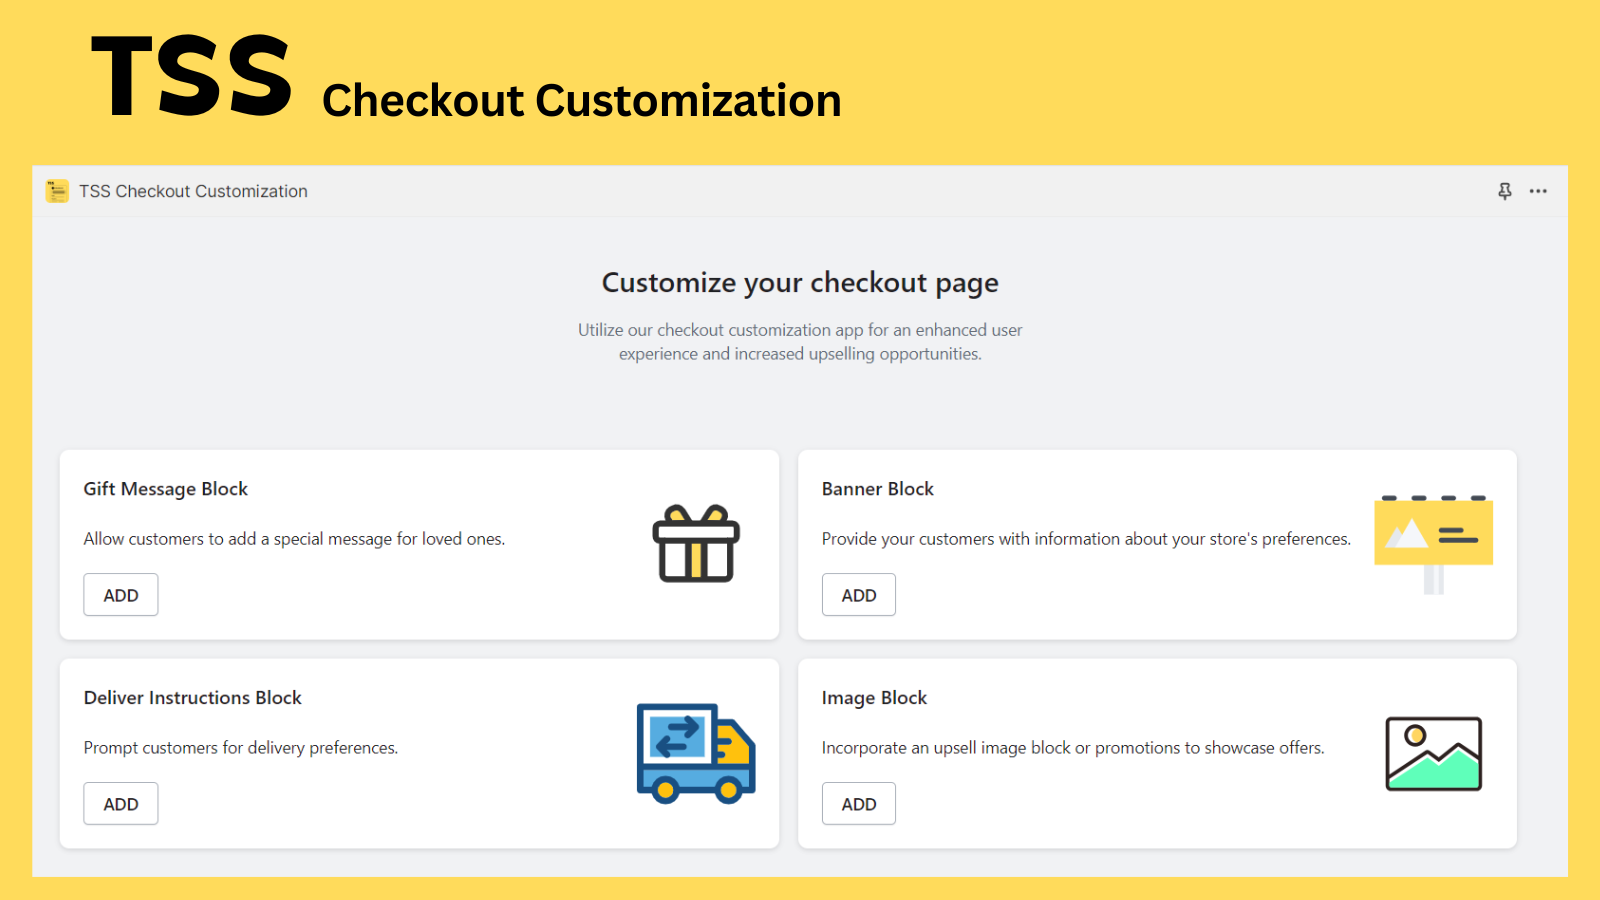 TSS Checkout Customization - Home screen